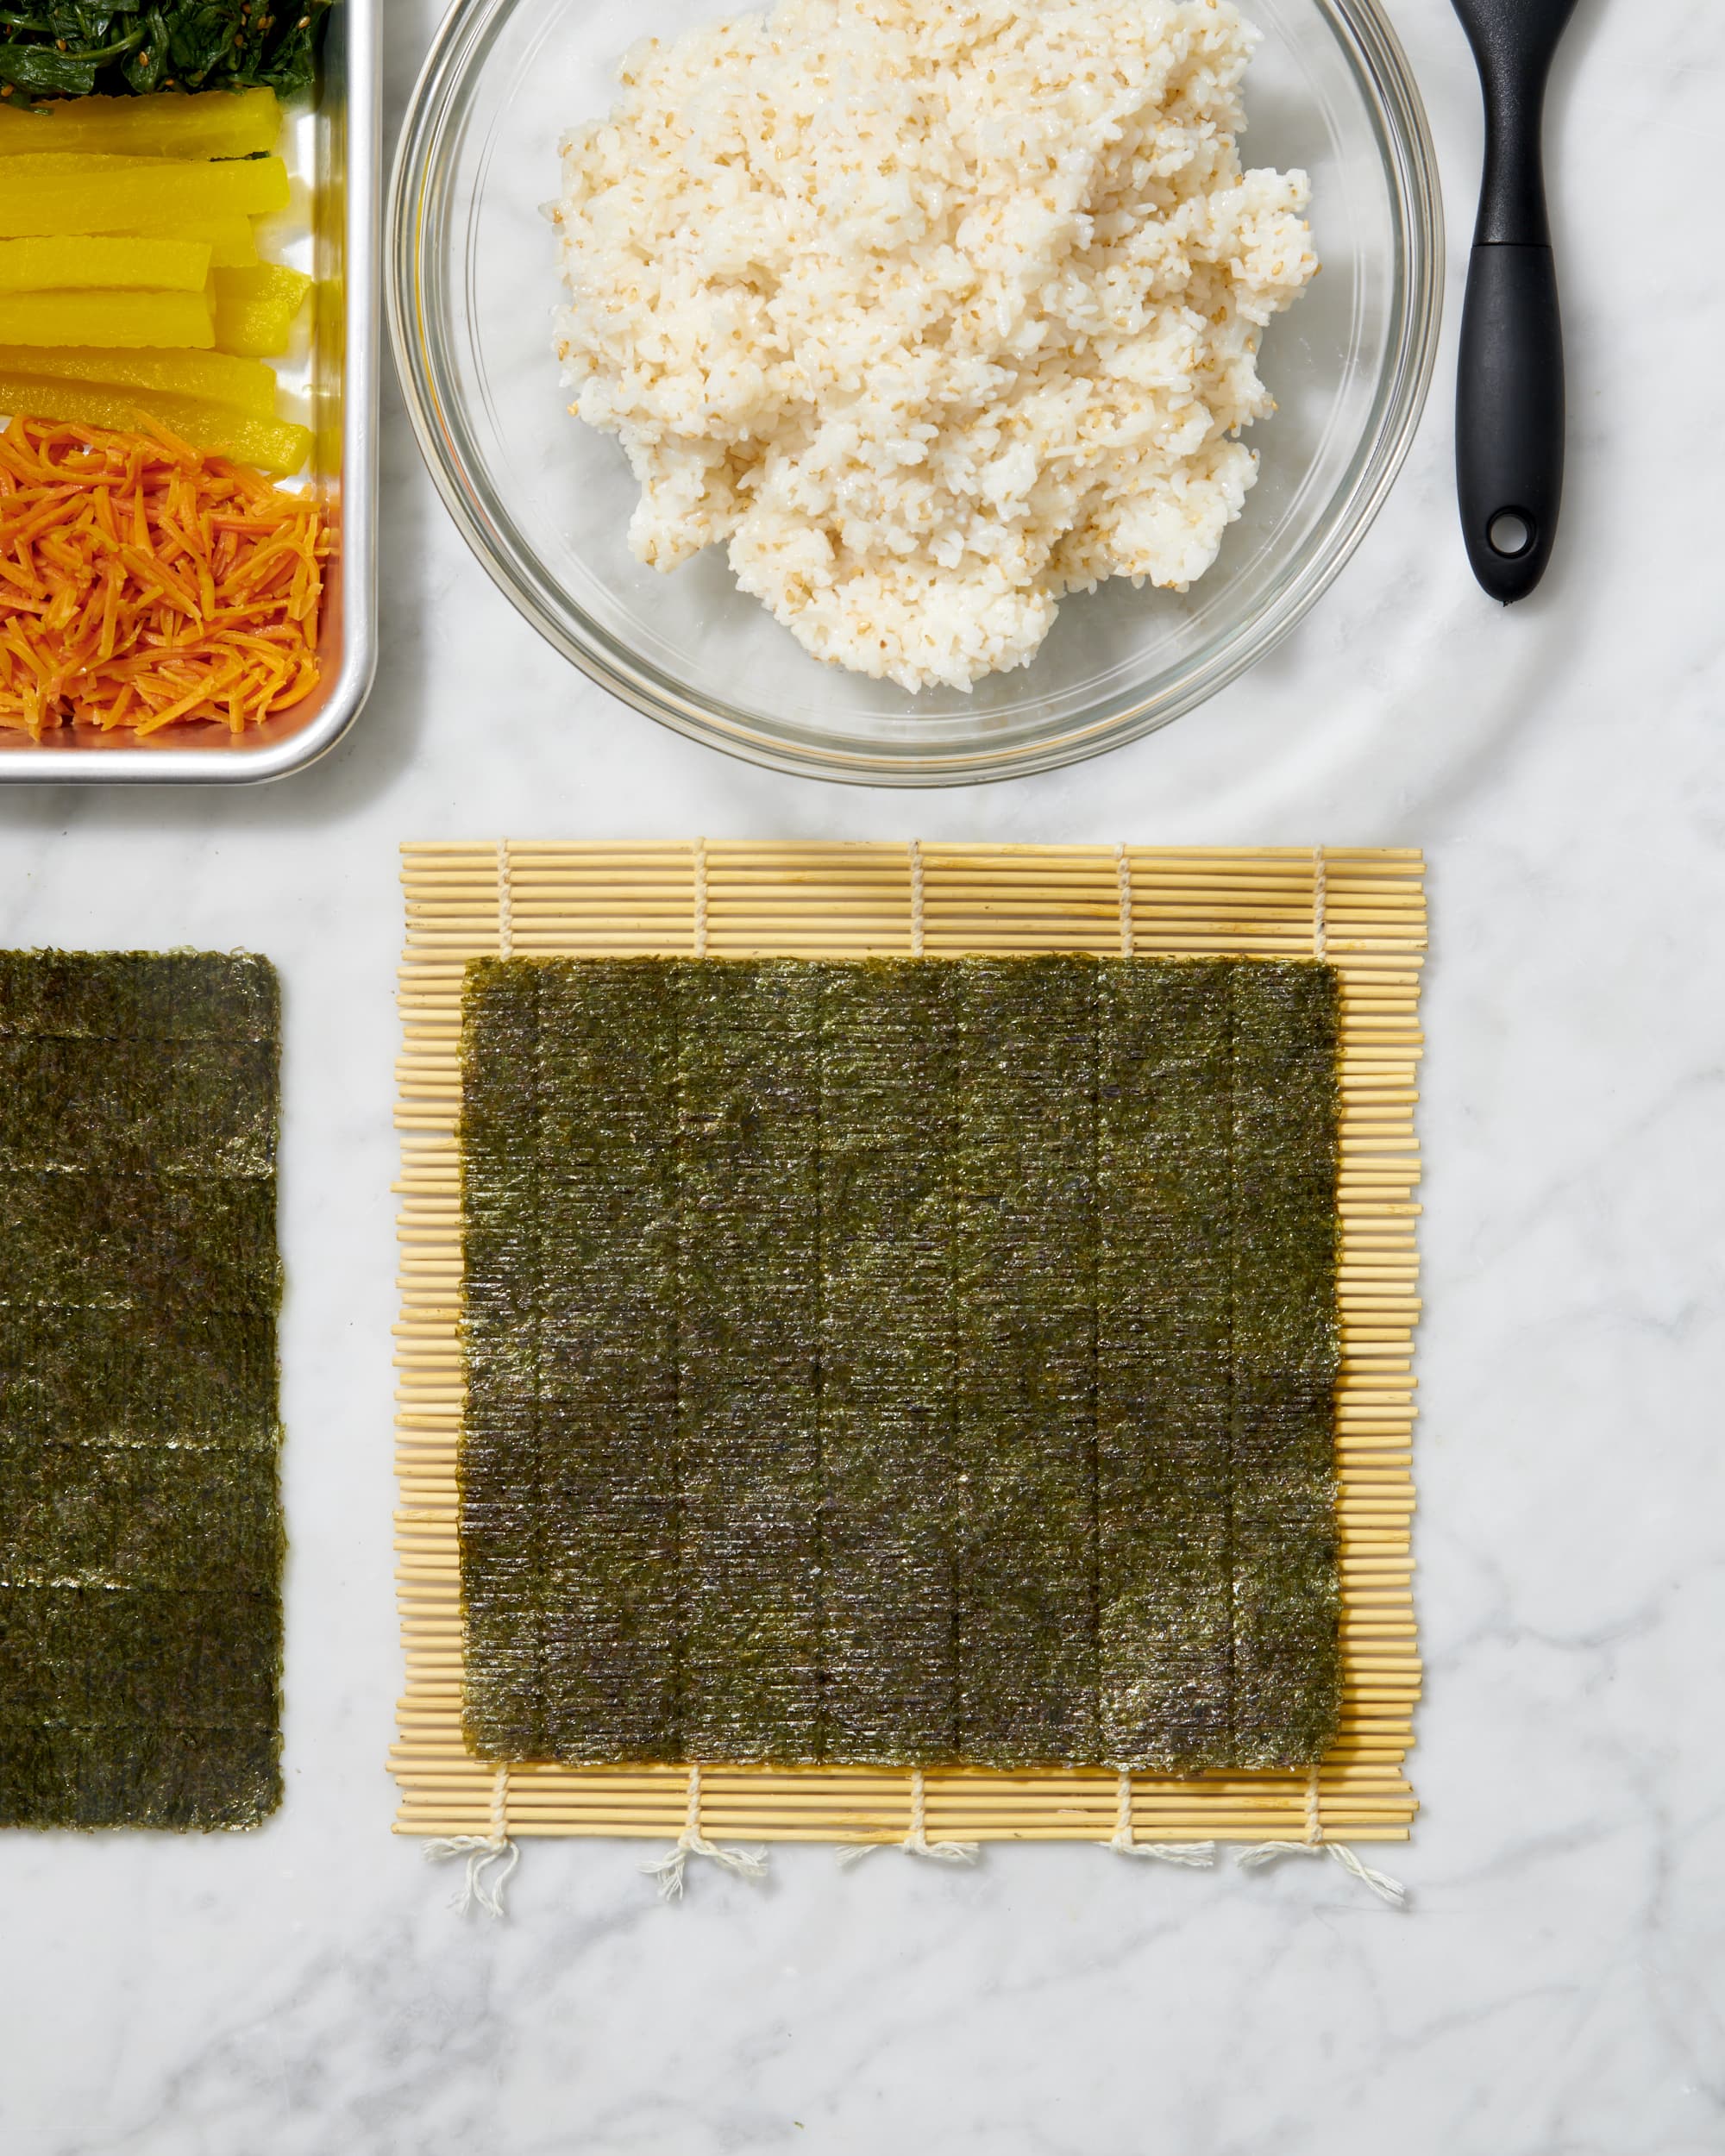 A Taste of Korea: Kimbap 김밥 - Seaweed-Wrapped Rice Rolls